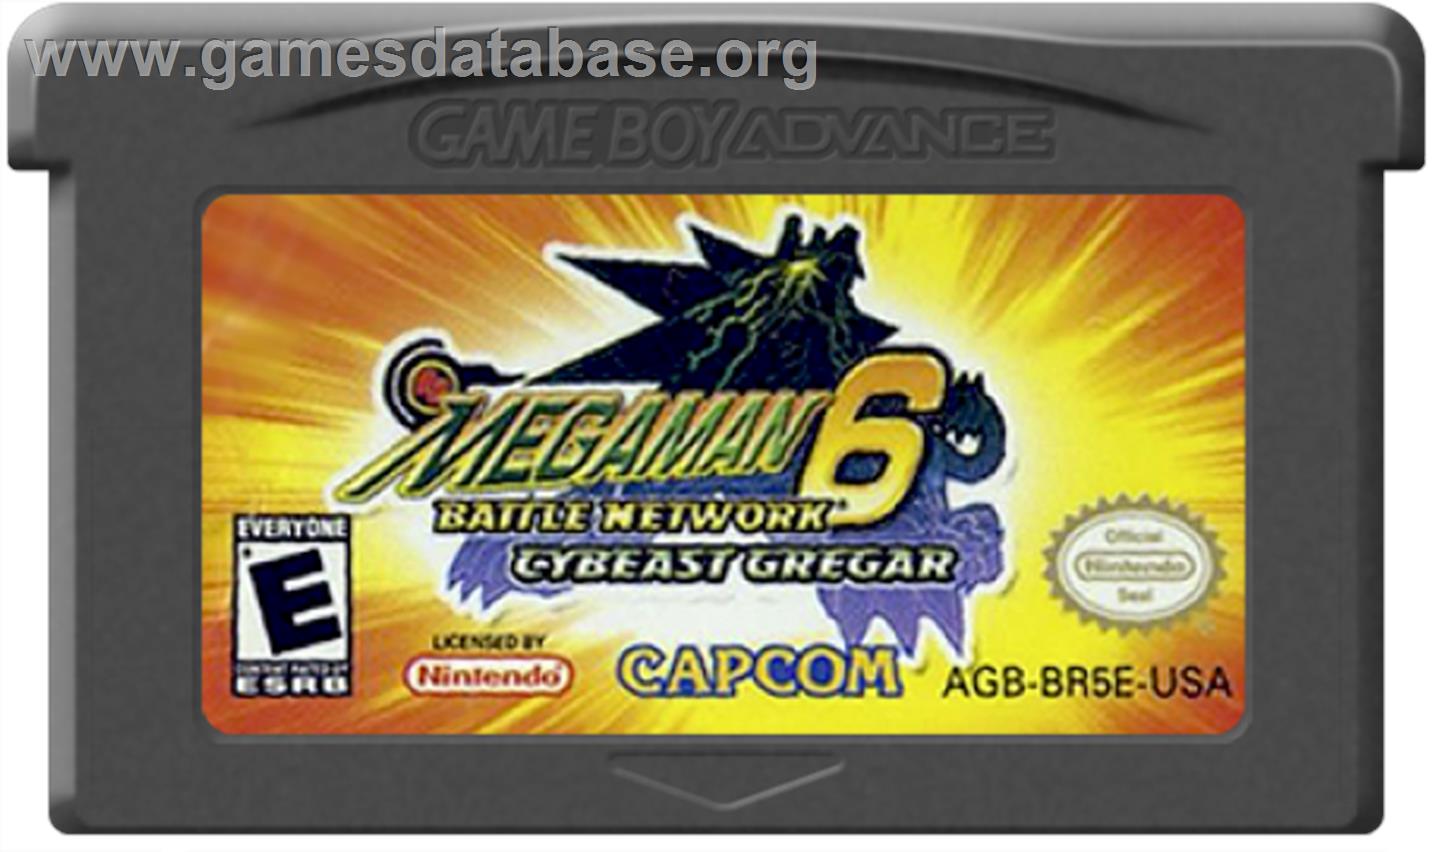 Mega Man Battle Network 6: Cybeast Gregar - Nintendo Game Boy Advance - Artwork - Cartridge